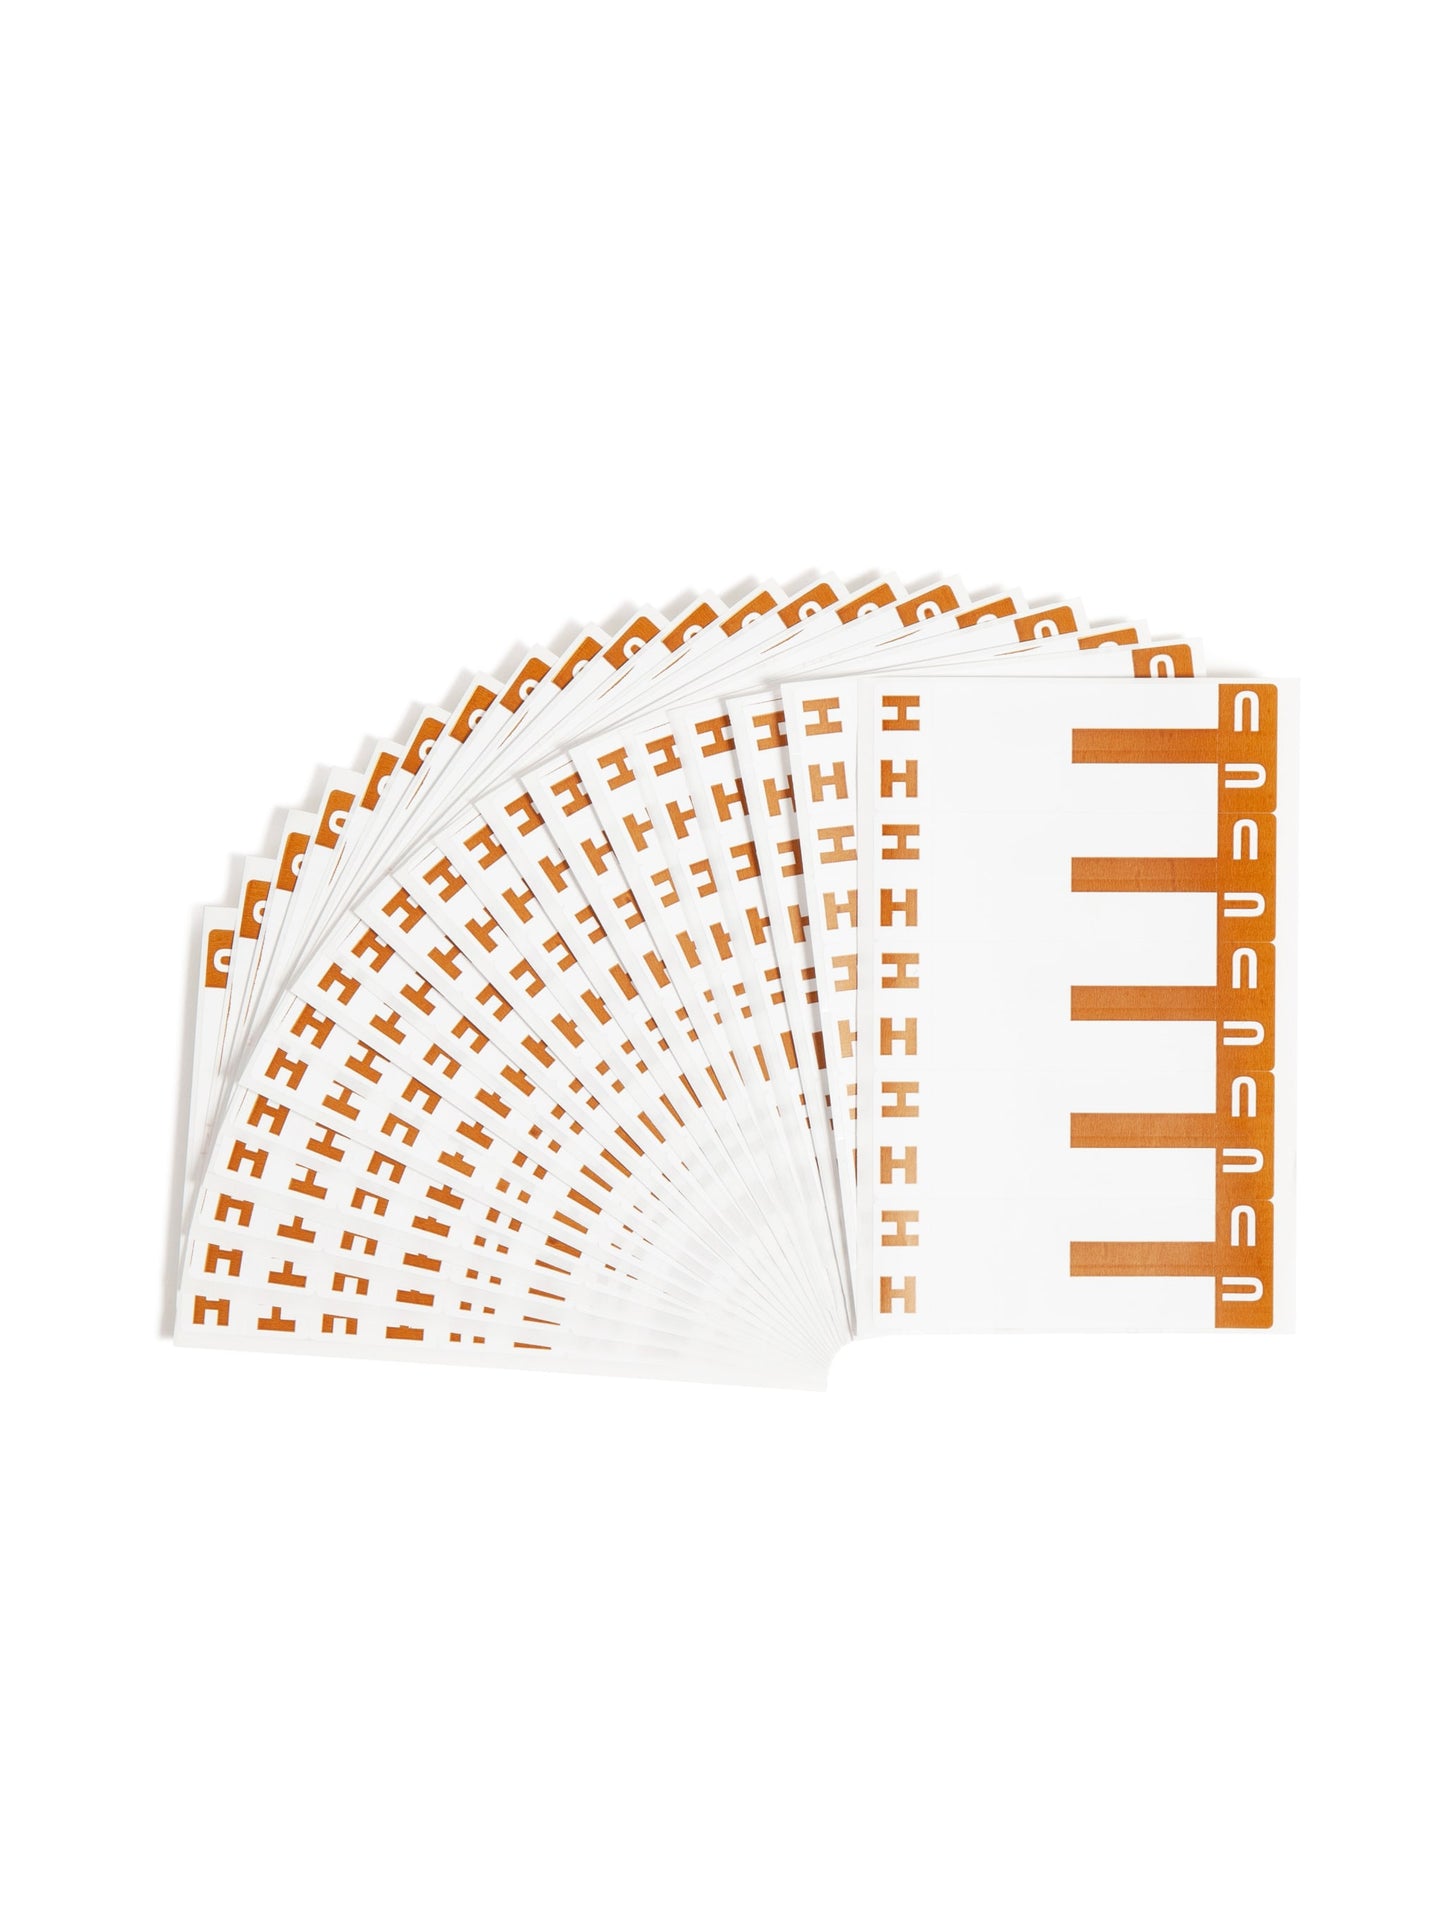 AlphaZ® NCC Color-Coded Name Labels - Sheets, Dark Brown Color, 3-5/8" X 1-5/32" Size, Set of 1, 086486671590